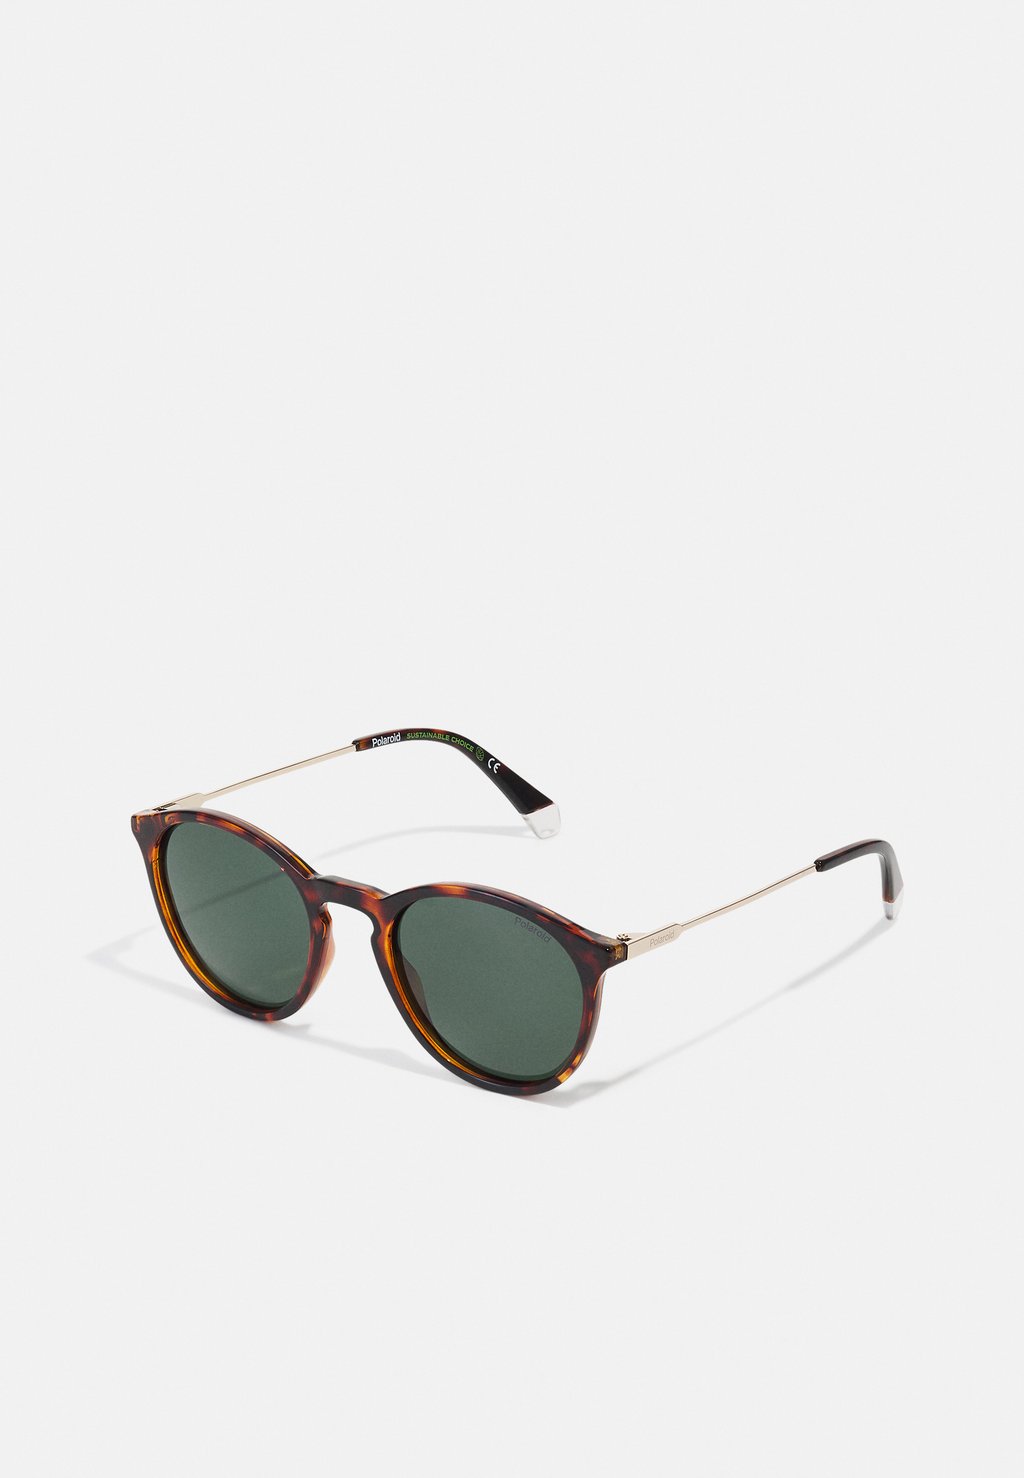 Солнцезащитные очки Unisex Polaroid, цвет havana